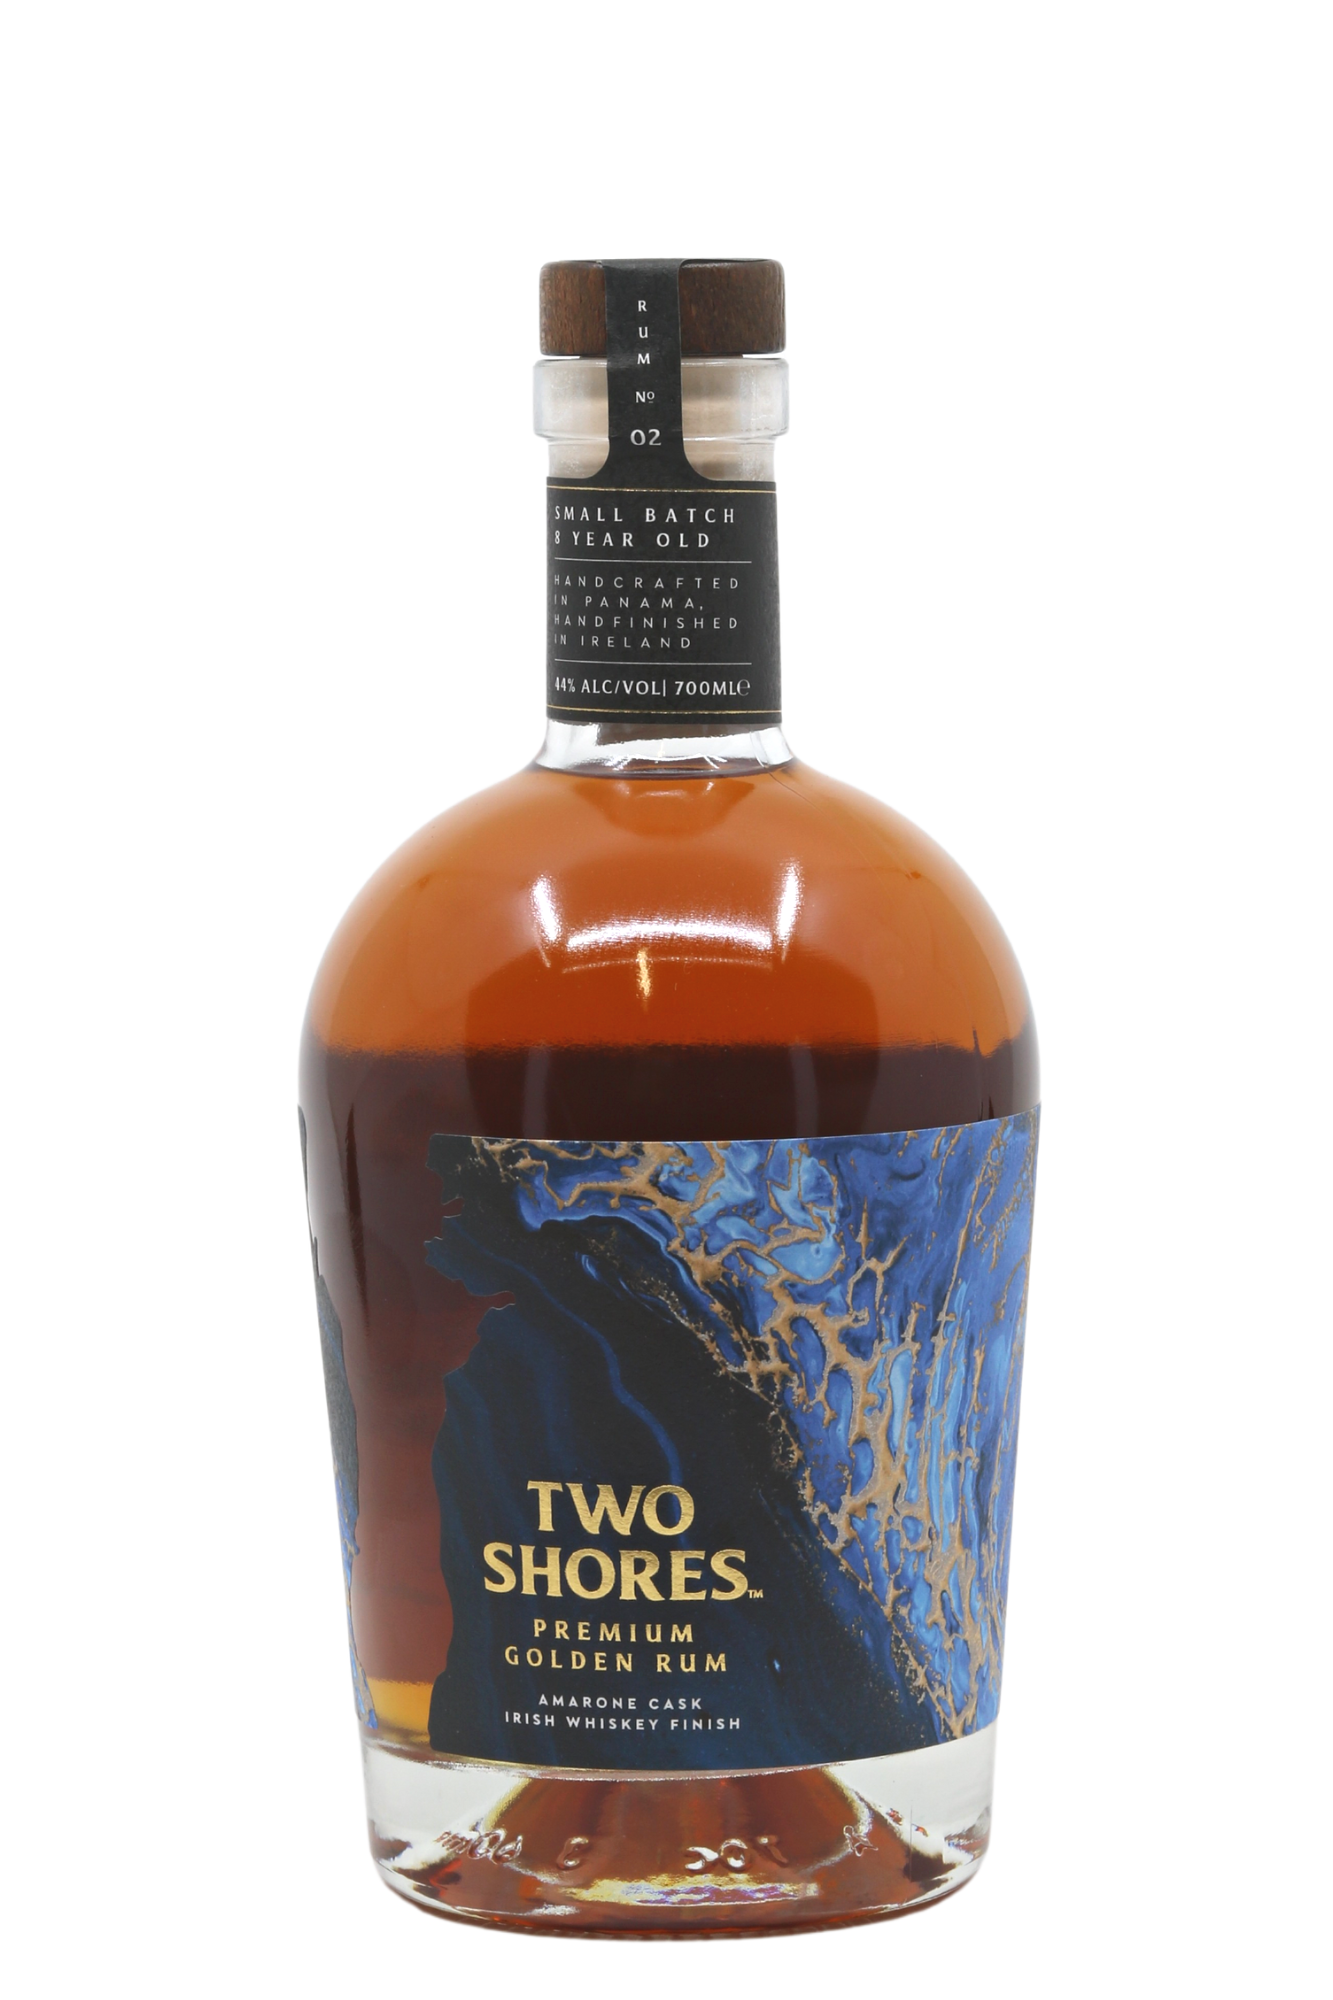 Two Shores Amarone Cask Rum